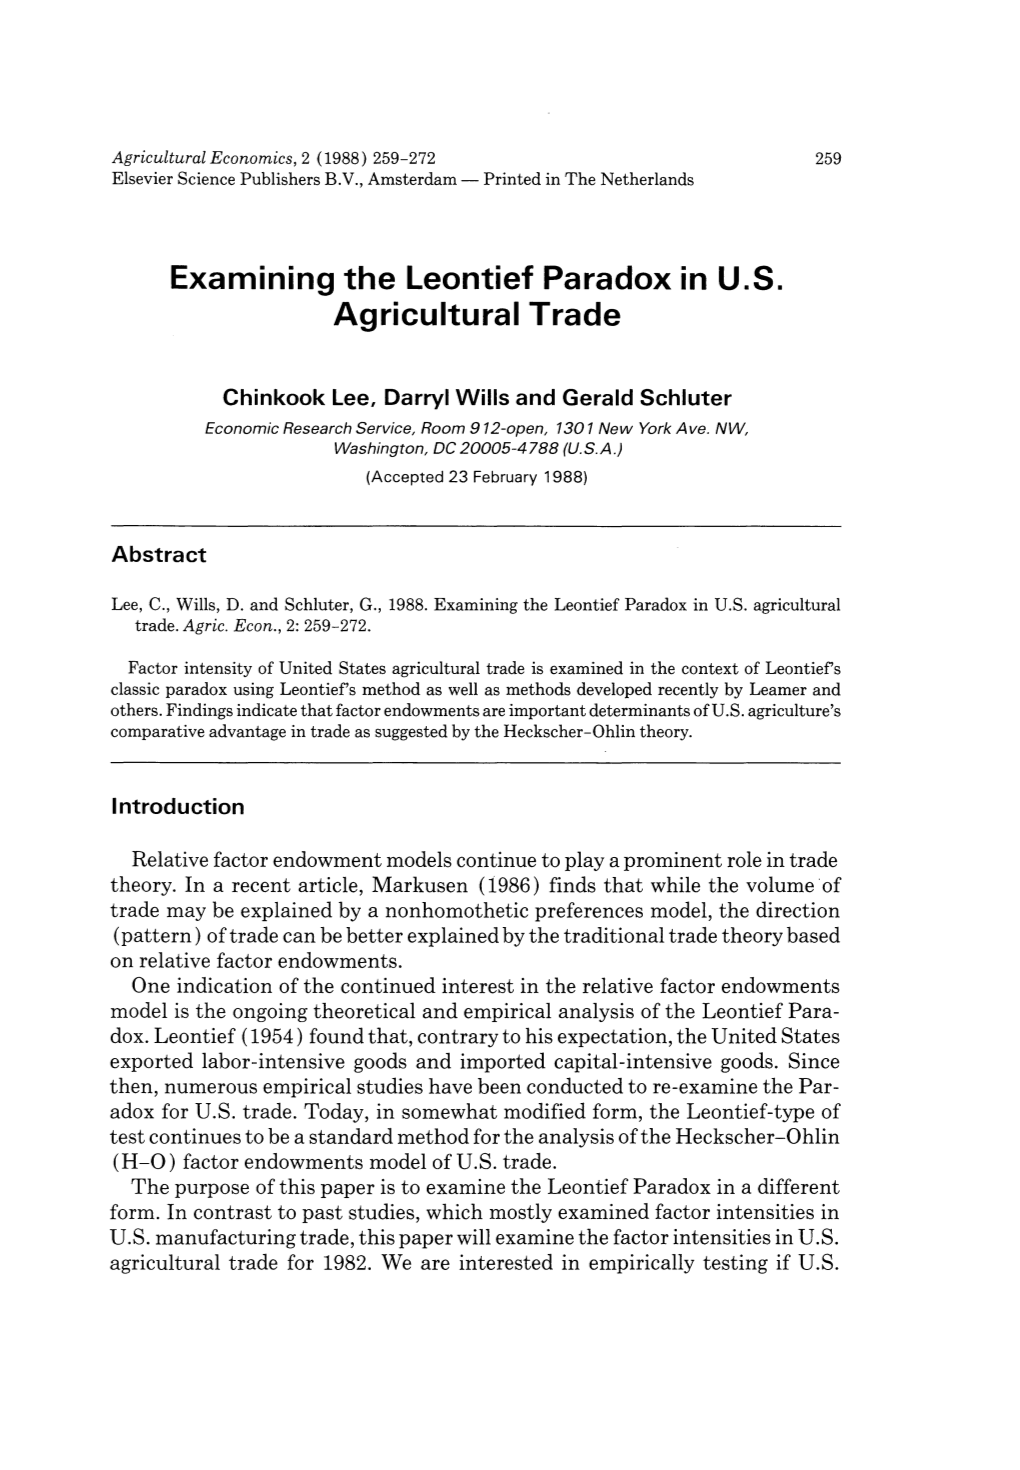 Examining the Leontief Paradox in U.S. Agricultural Trade